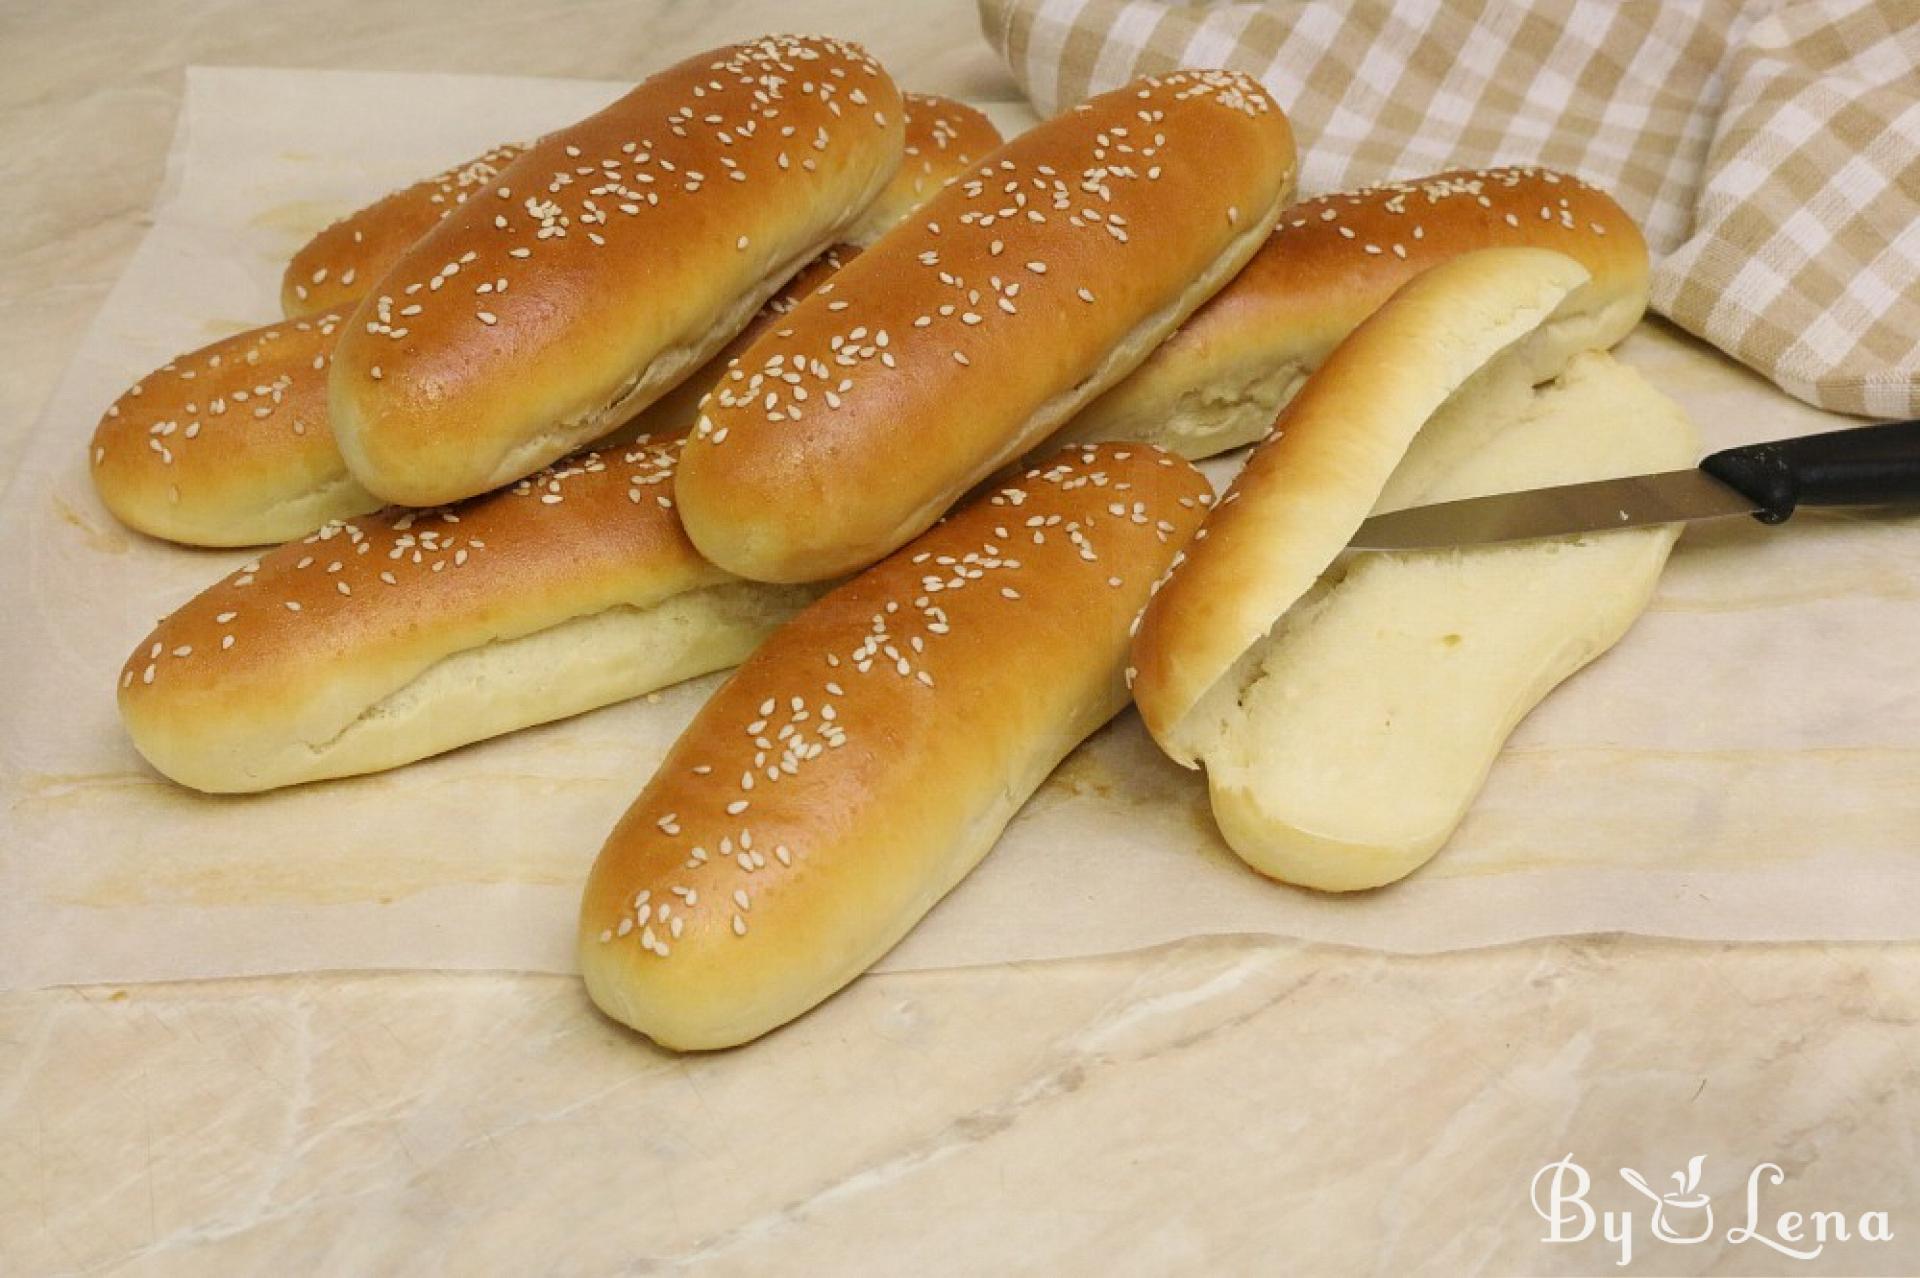 Moldovan Round Braided Bread - Colaci 